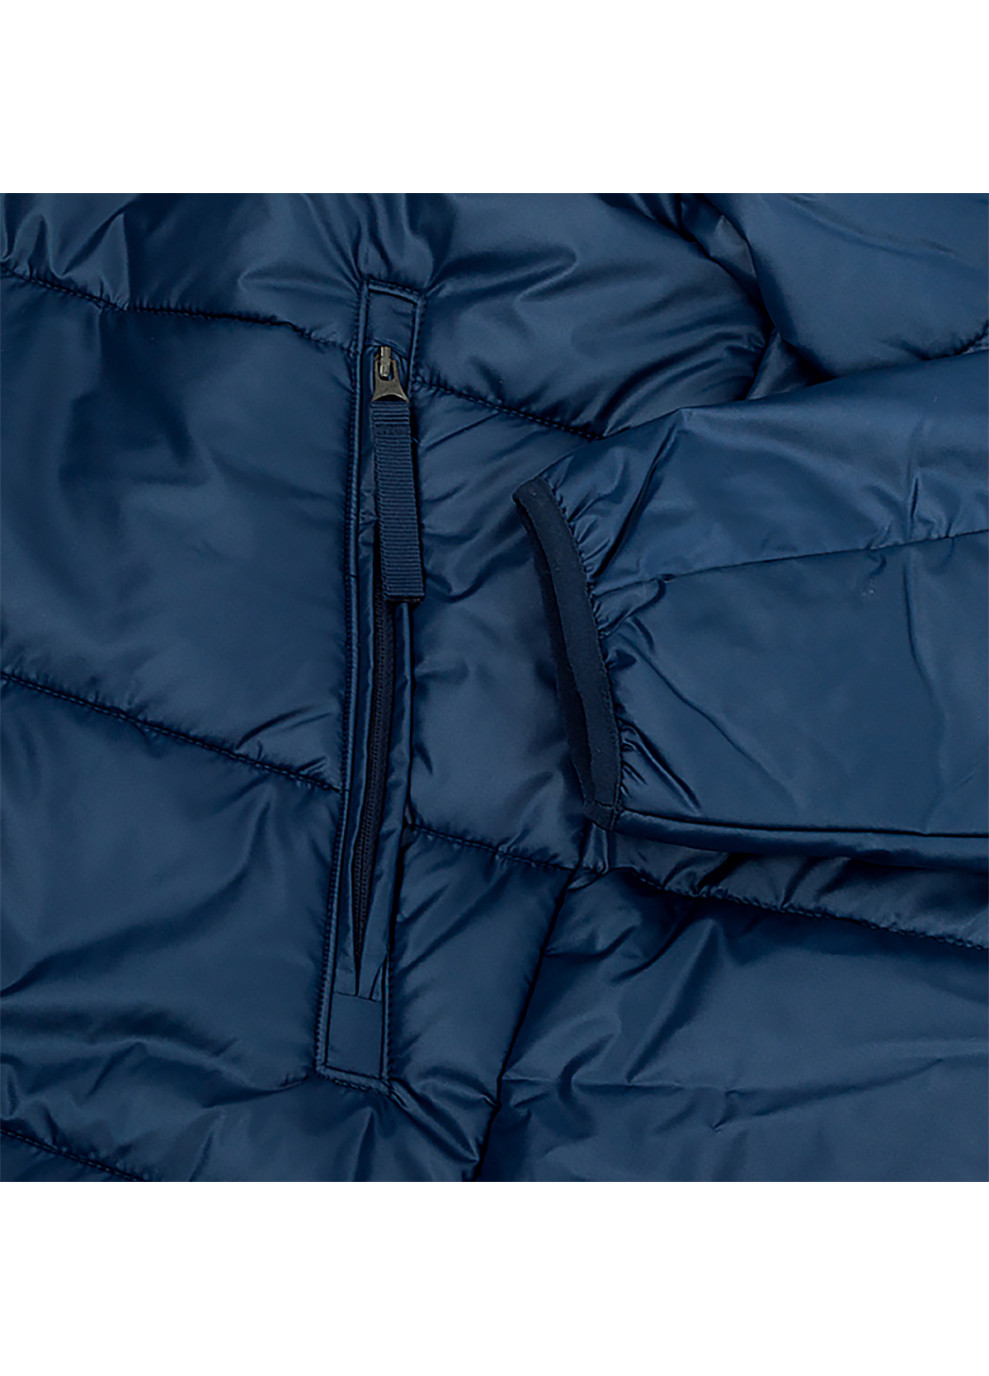 Синяя демисезонная мужская куртка m nk tf acdpr 2in1 sdf jacket синий Nike